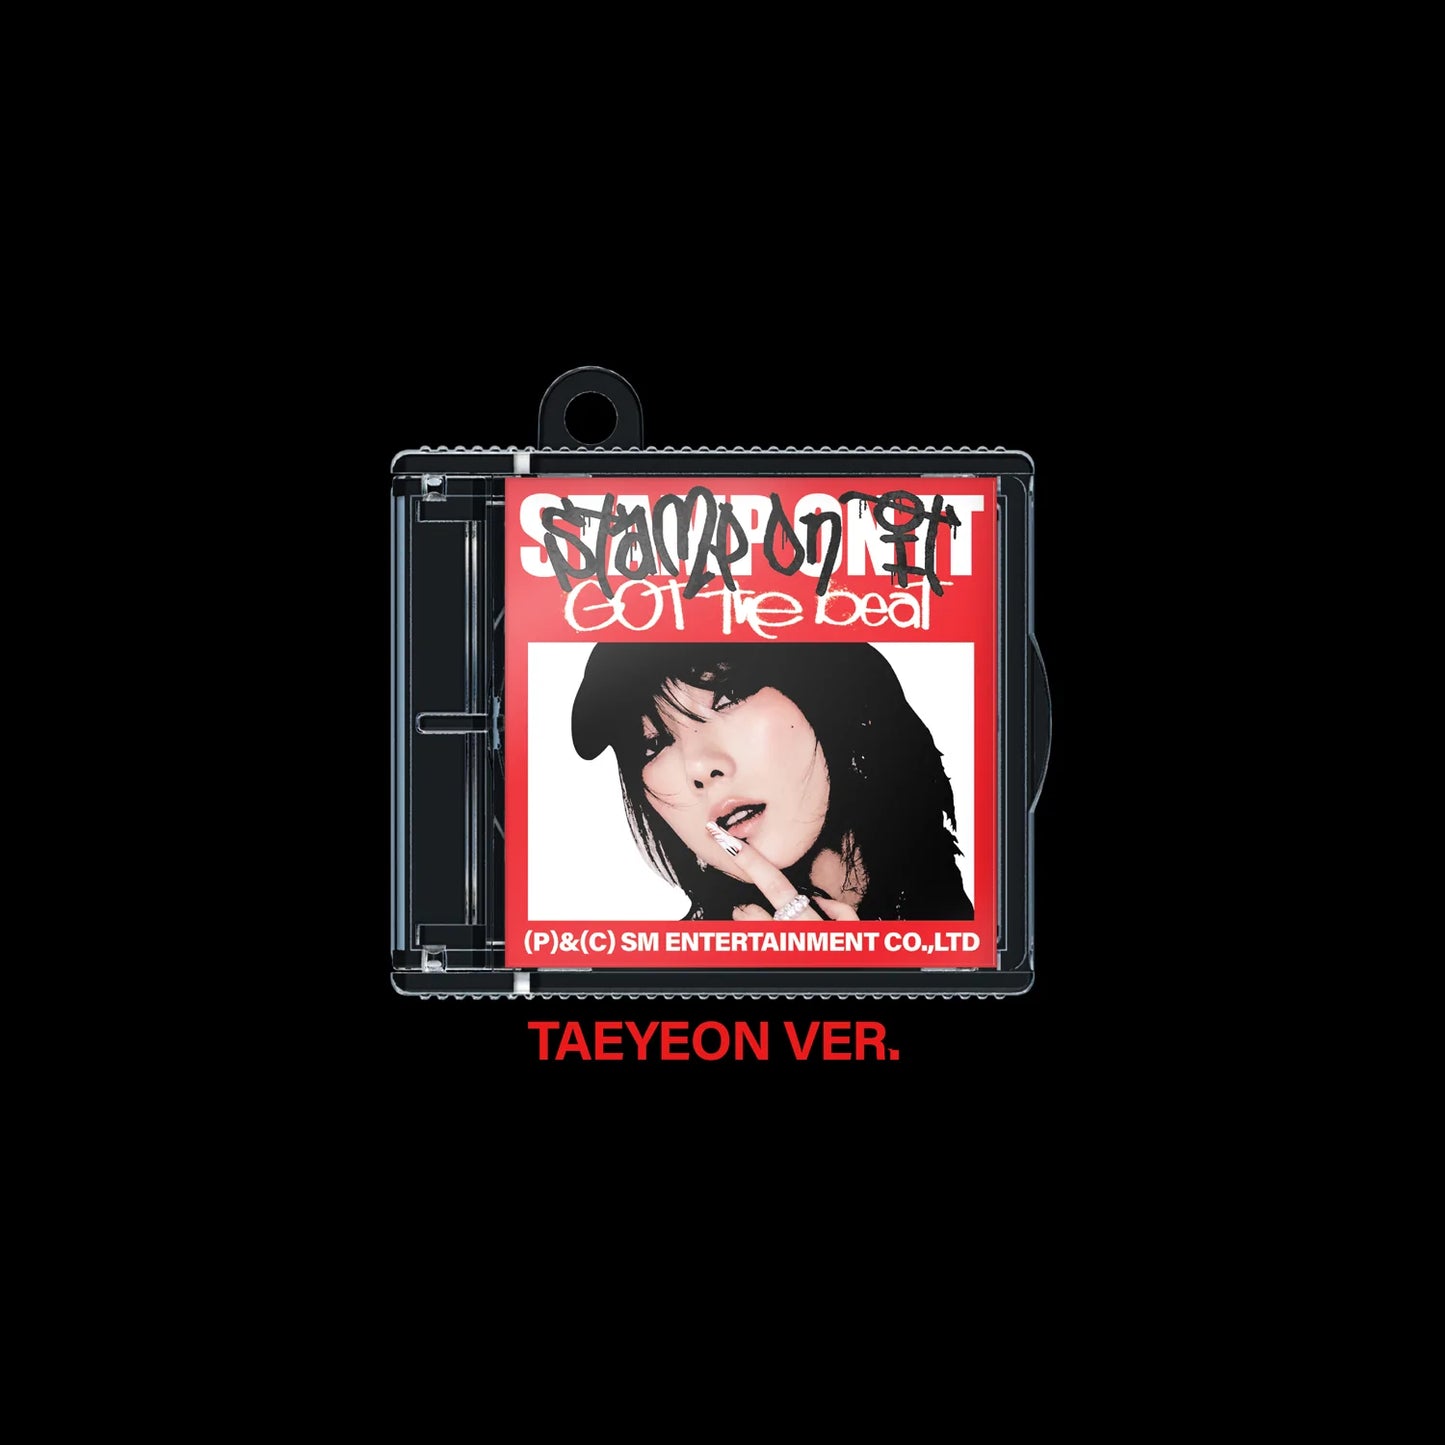 GOT THE BEAT 1ST MINI ALBUM 'STAMP ON IT' (SMINI) TAEYEON VERSION COVER